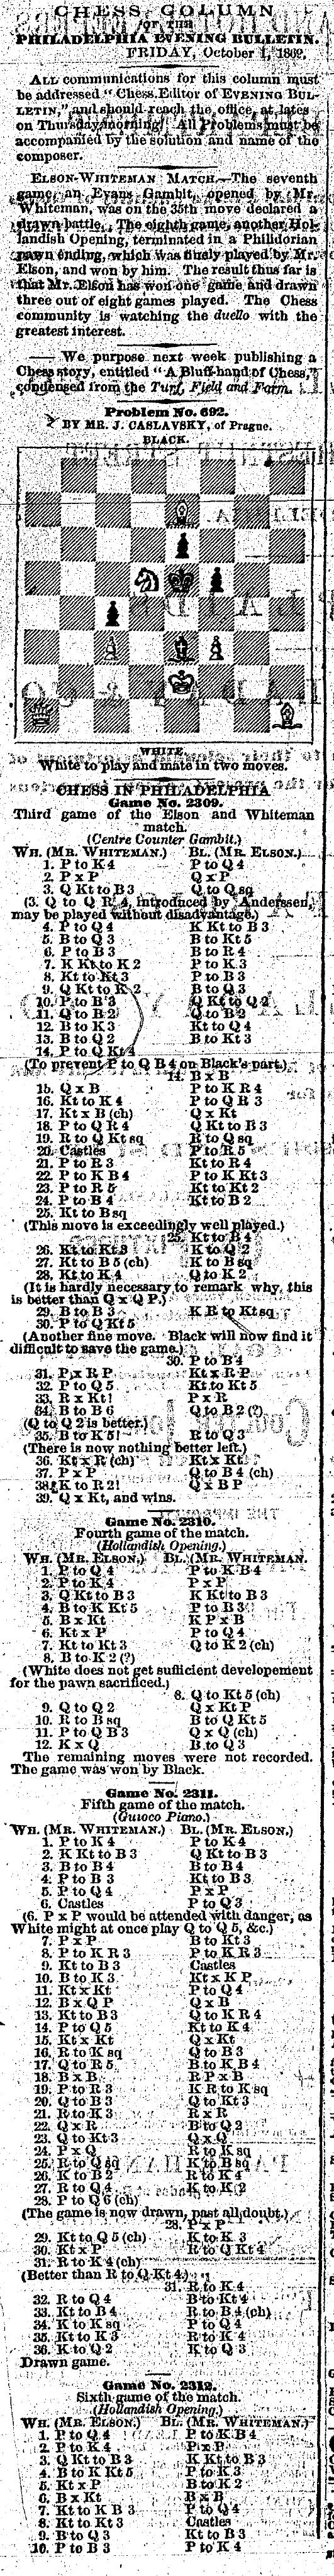 1869.10.01-01 Philadelphia Daily Evening Bulletin.jpg